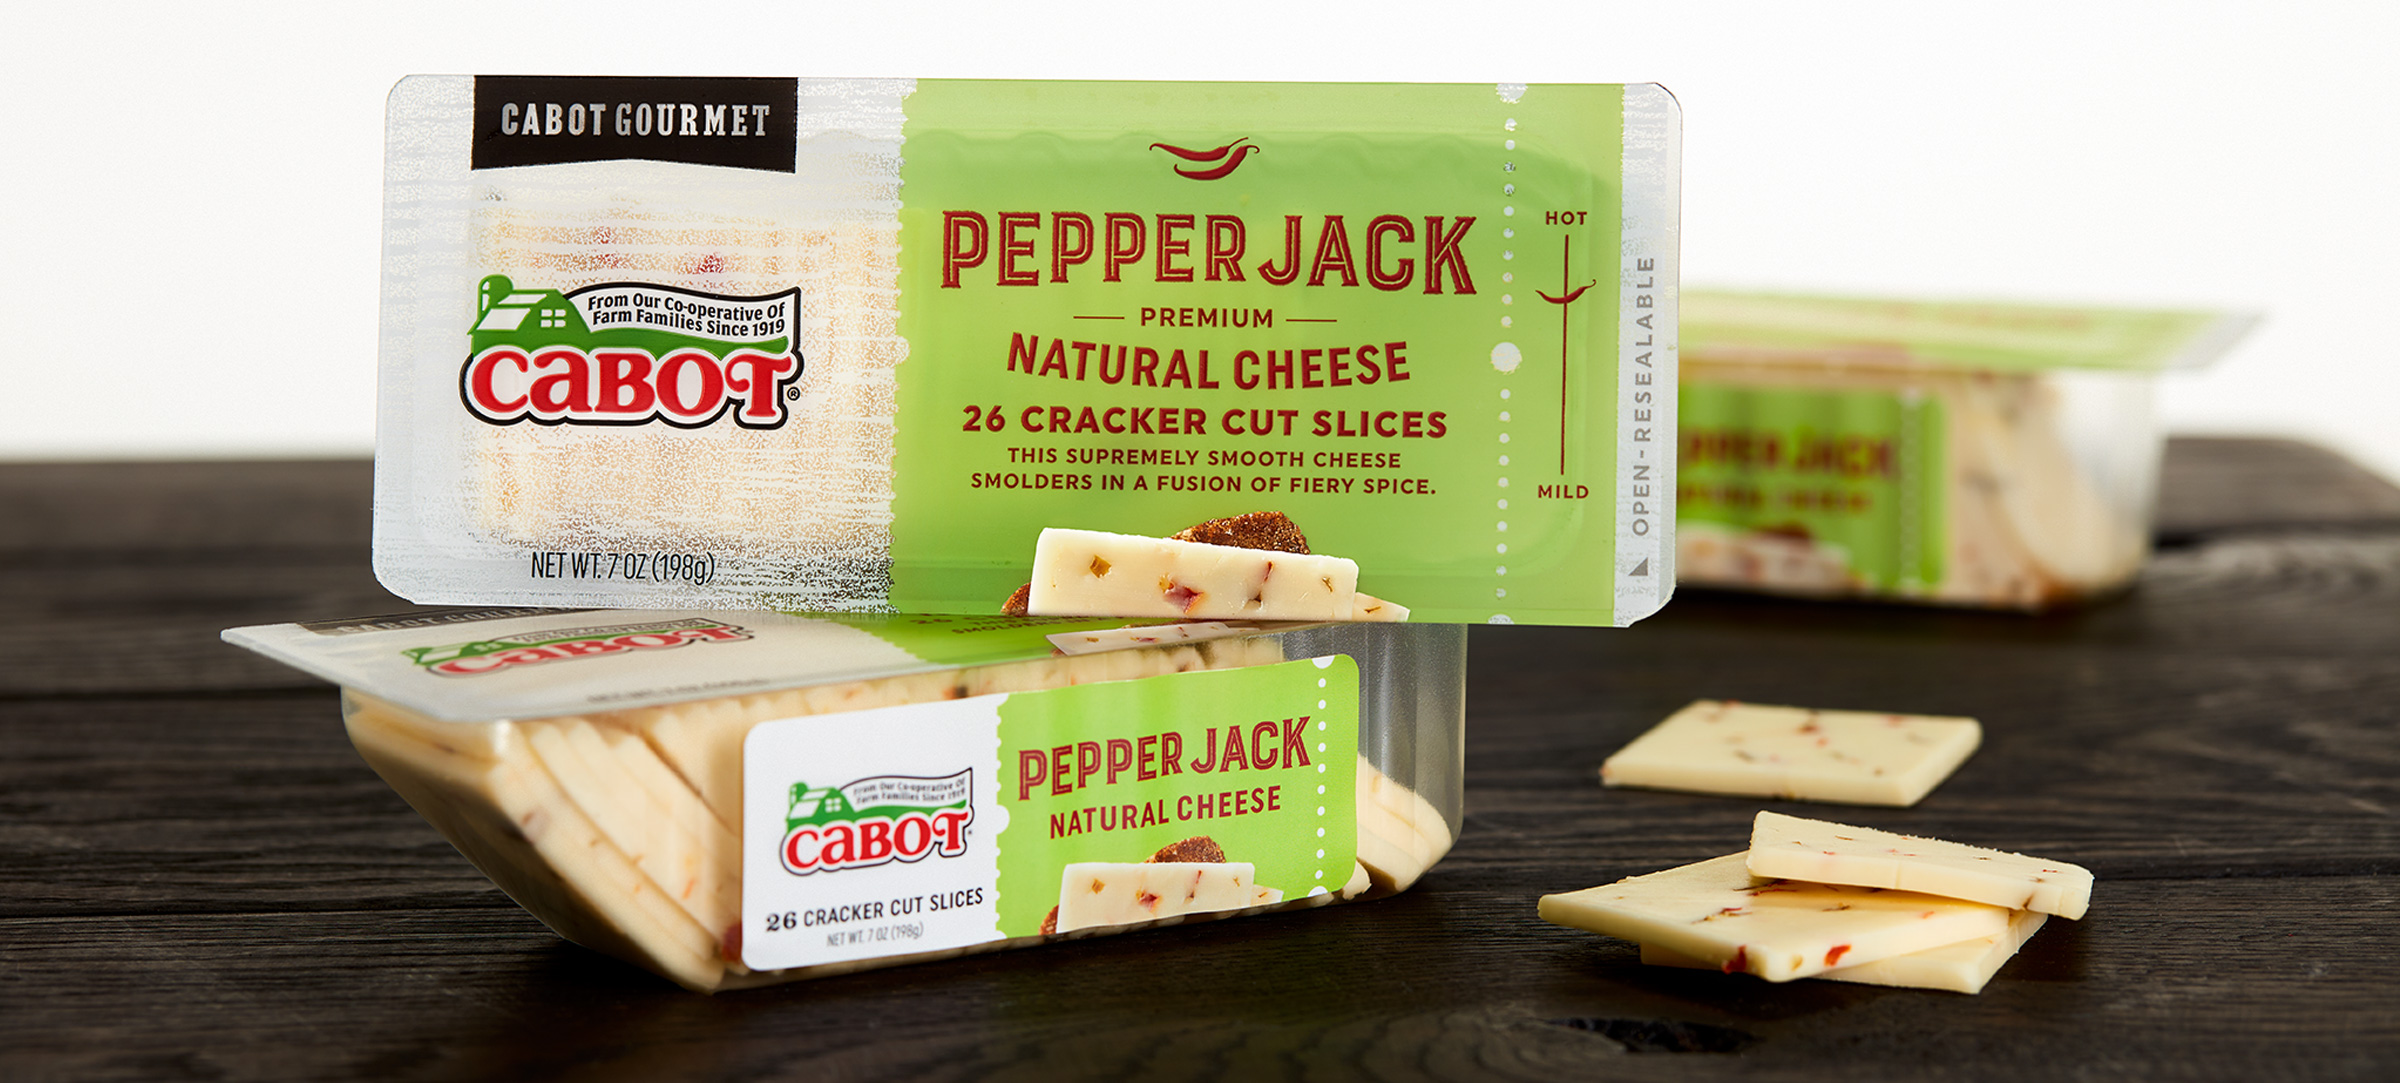 Cabot pepper jack cheese packaging - Werner Design